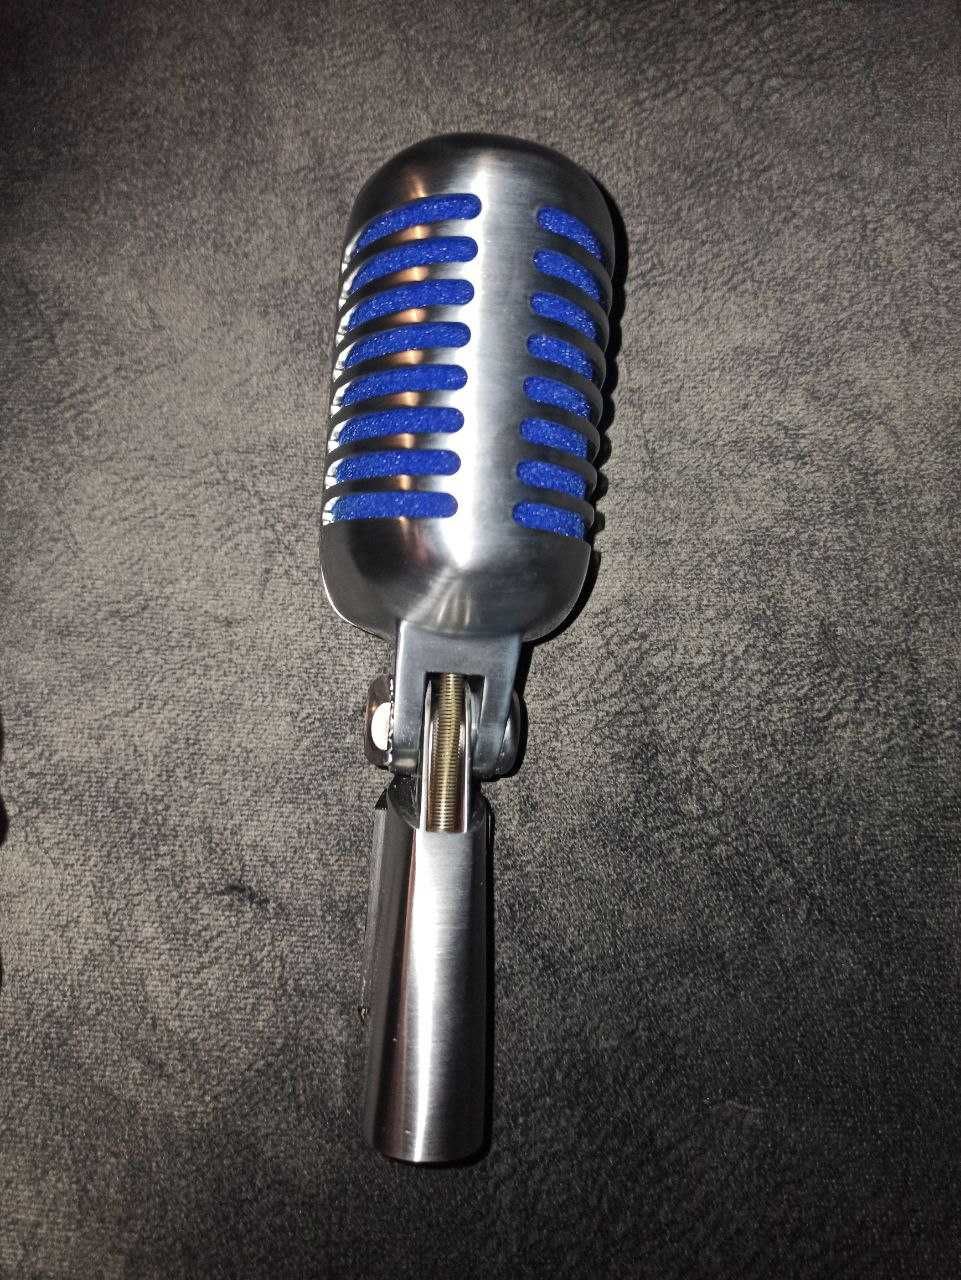 Вокальный микрофон SHURE Super 55 Deluxe